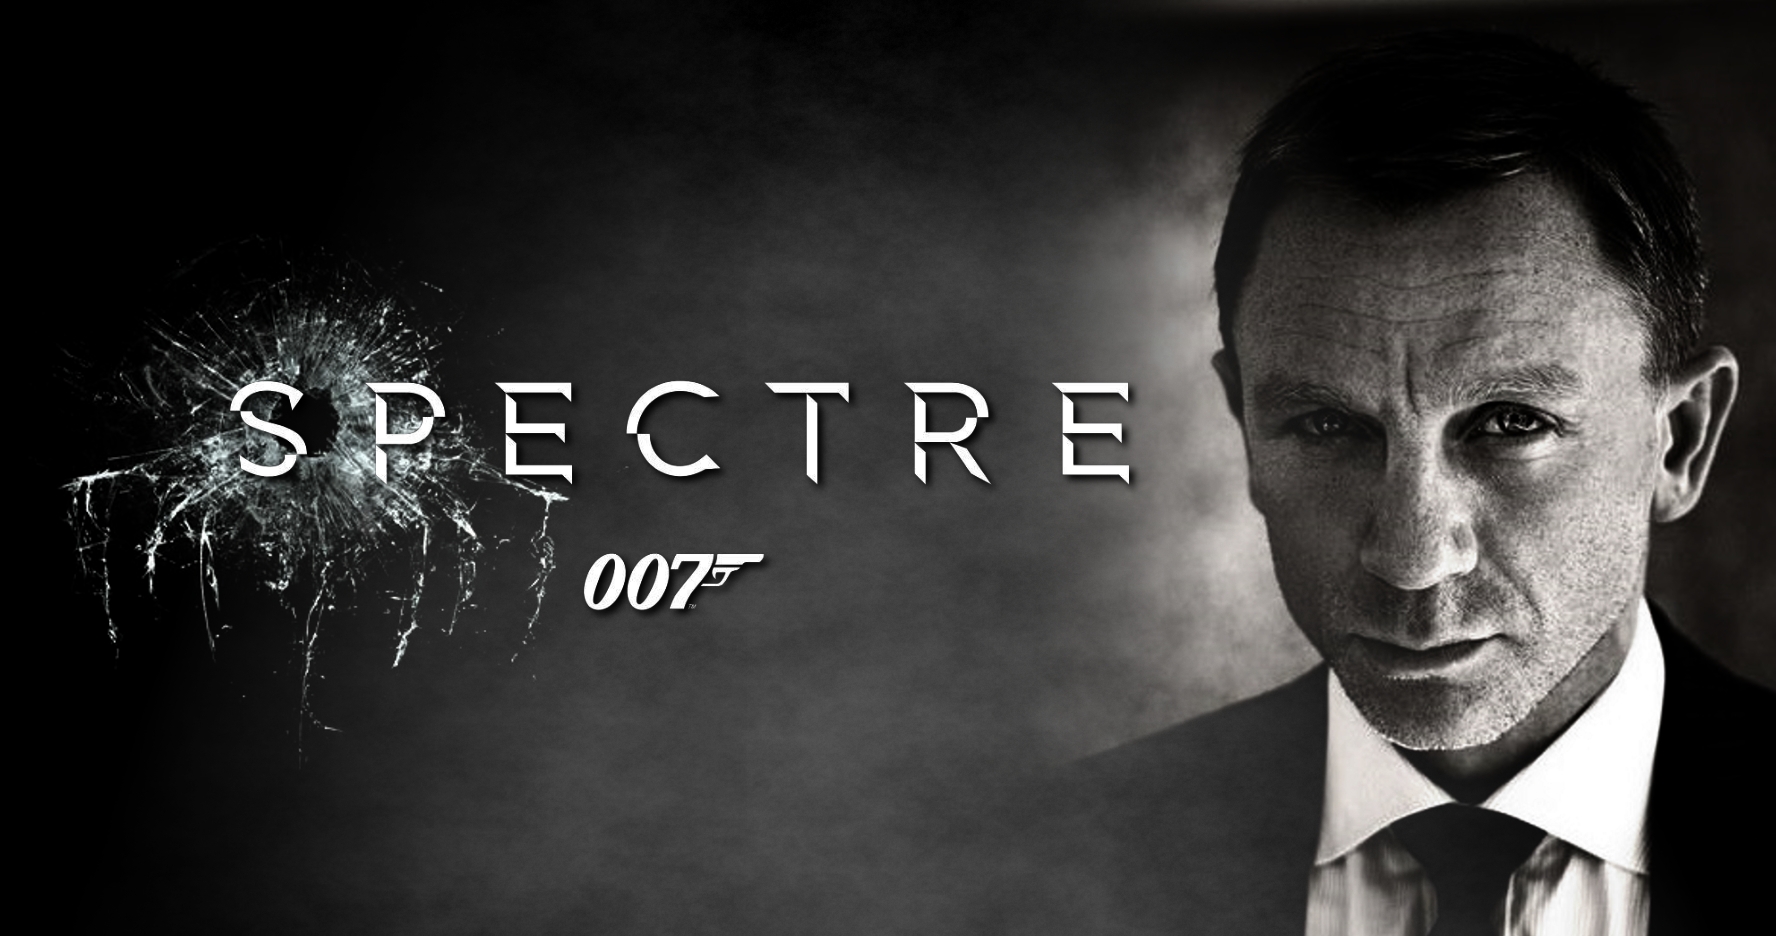 Spectre-007-with-Daniel-Craig